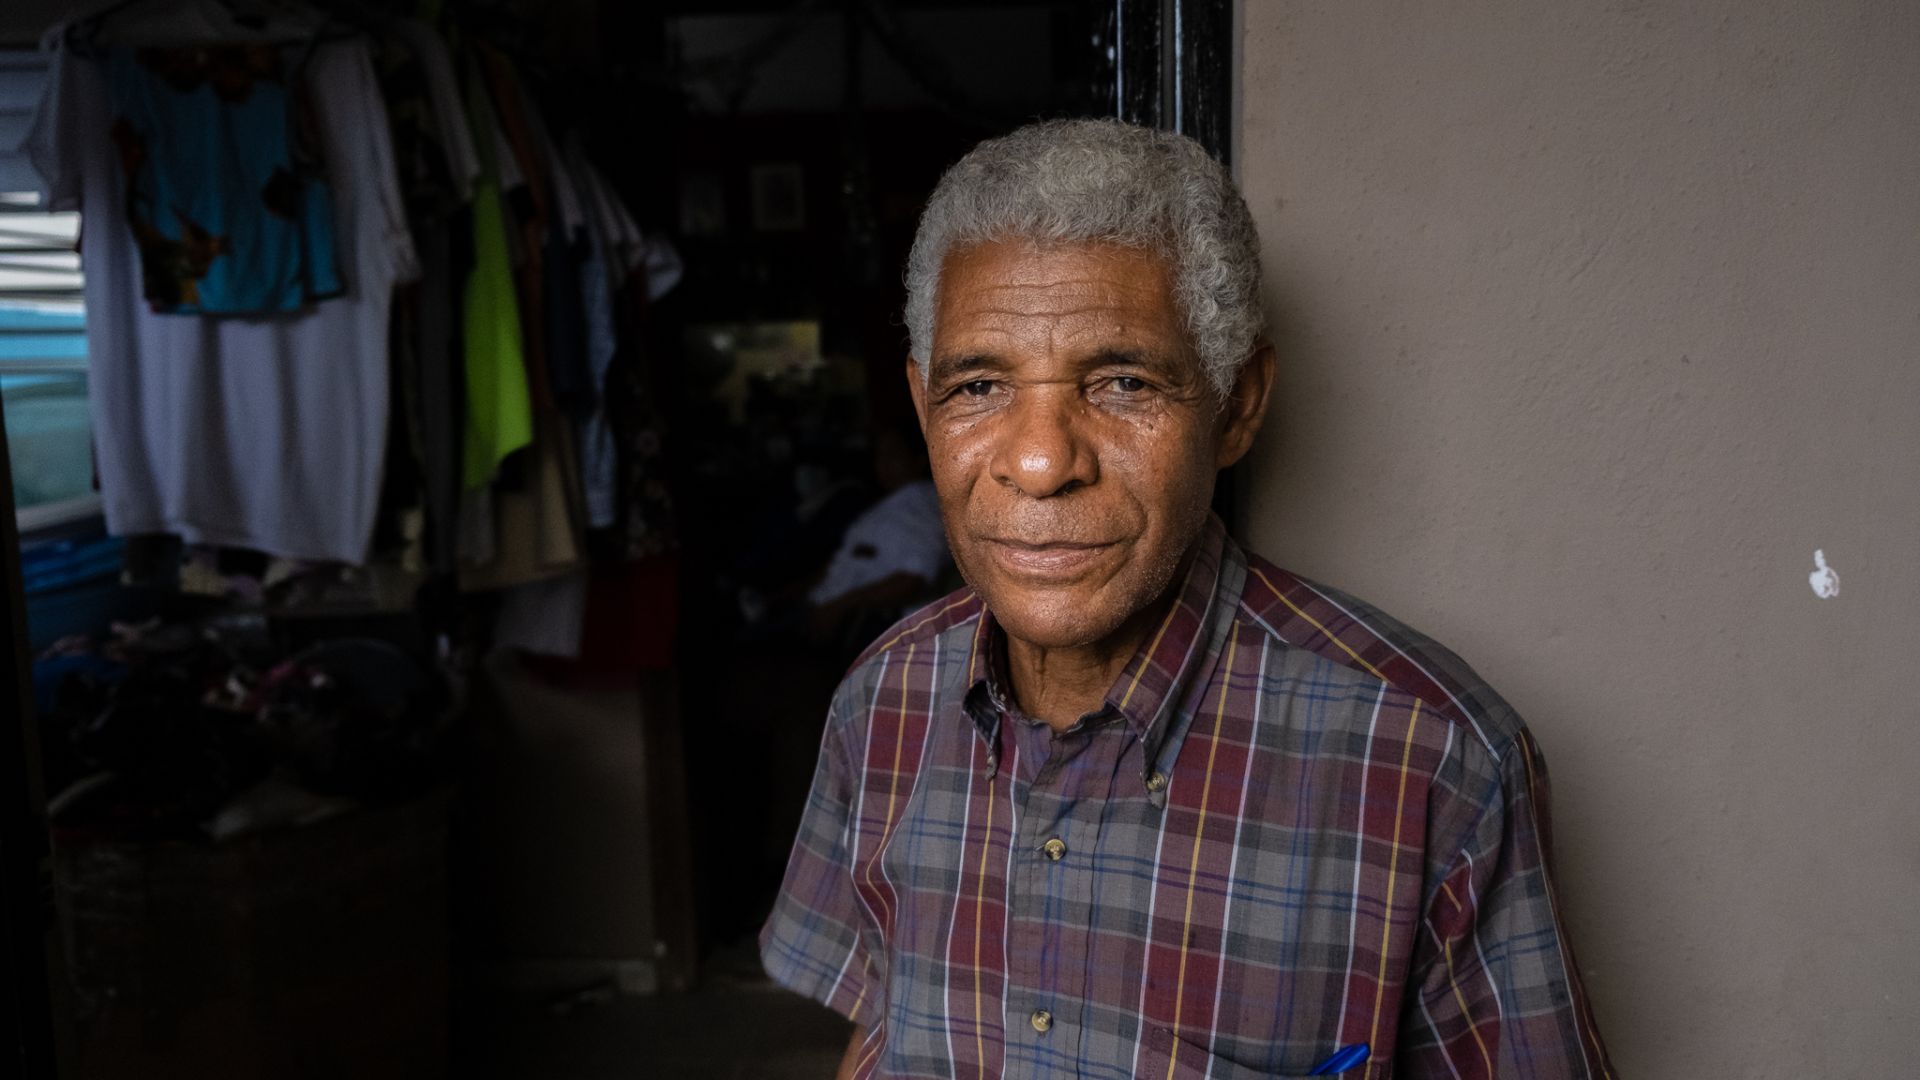 Rafael Antonio Hernandez, 73, is a resident of Paraiso de Dios, Haina